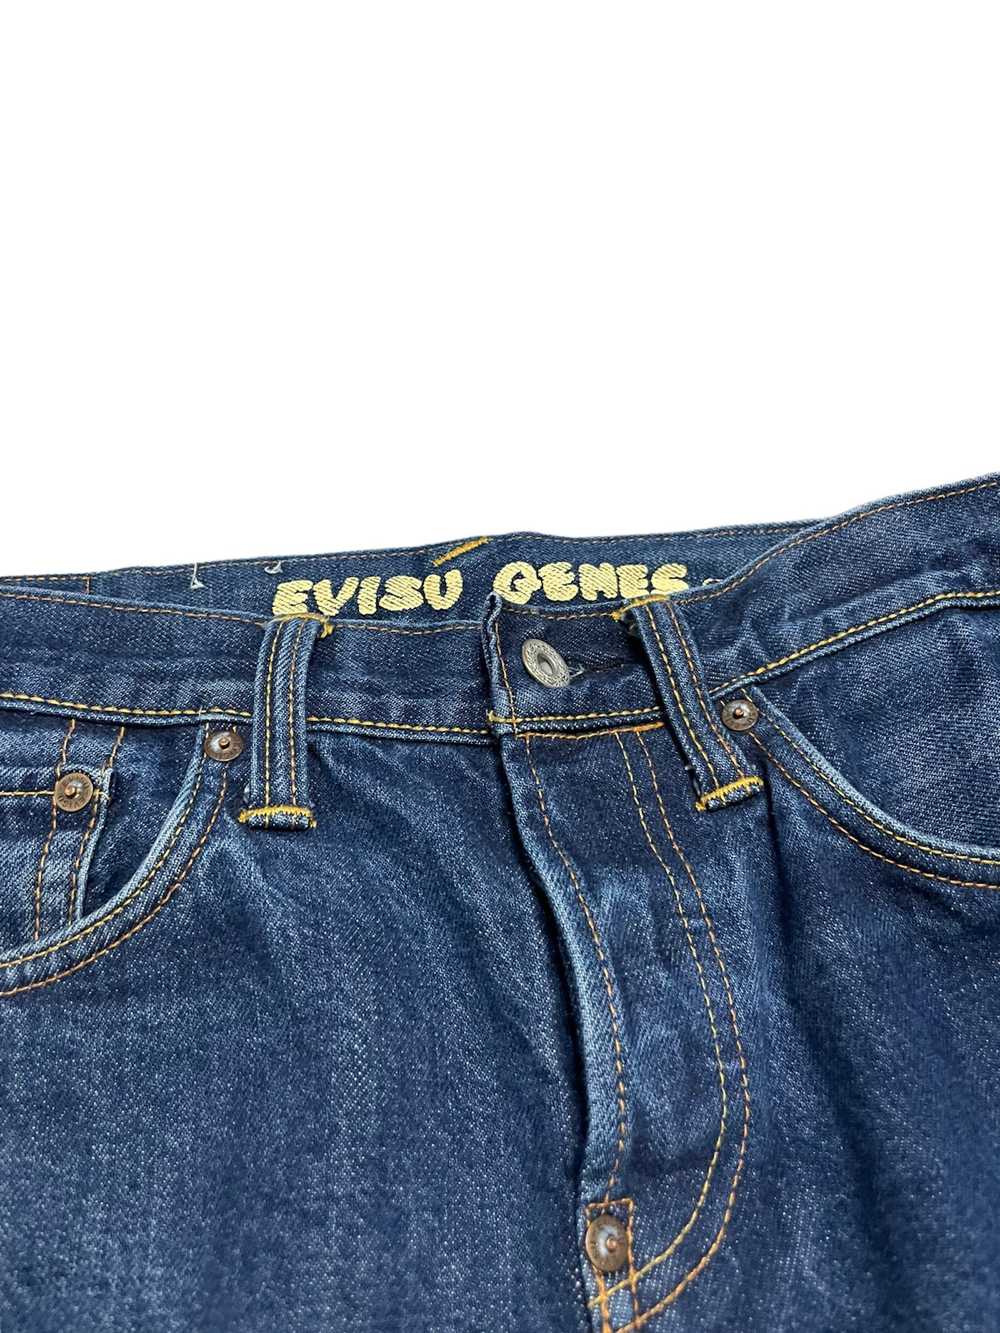 Evisu Vintage Evisu denim jeans - image 2